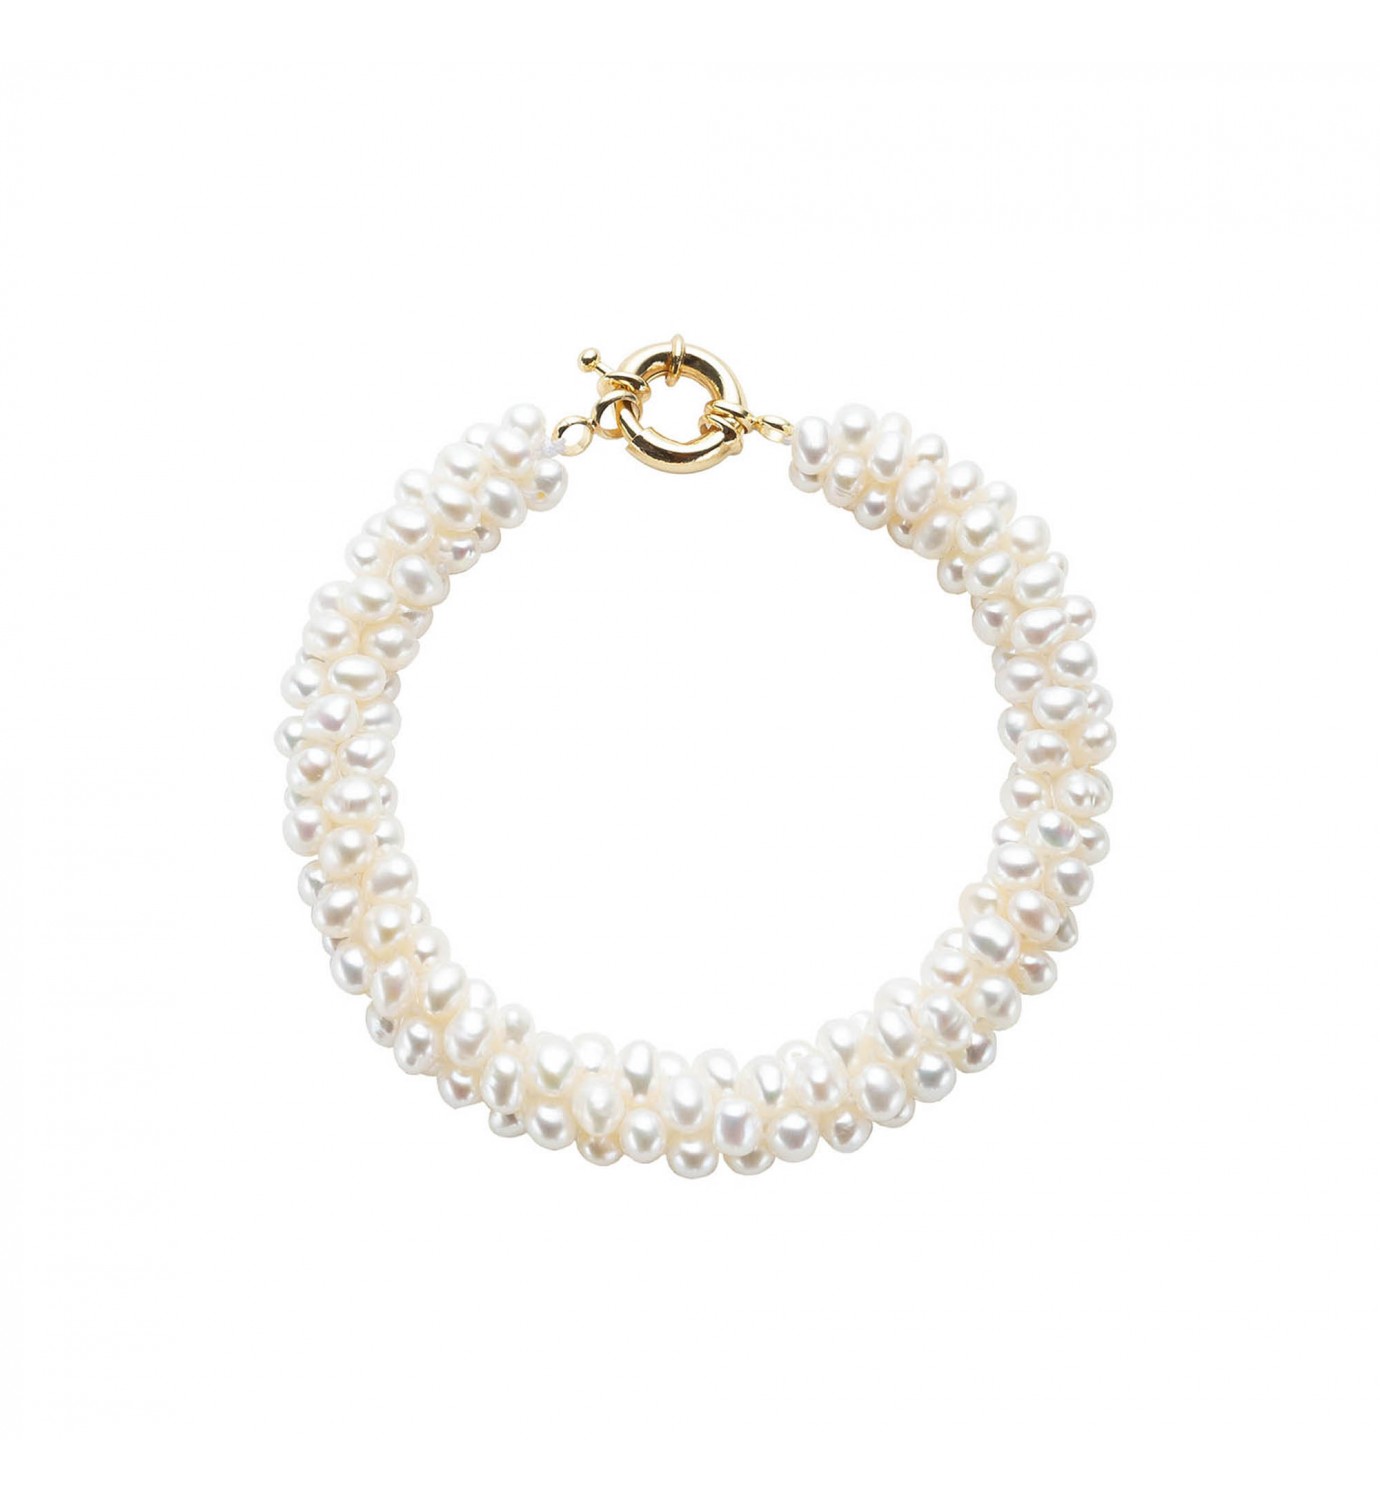 Jewelry Store丨Pearl Necklaces & Earrings 丨 White Victoria